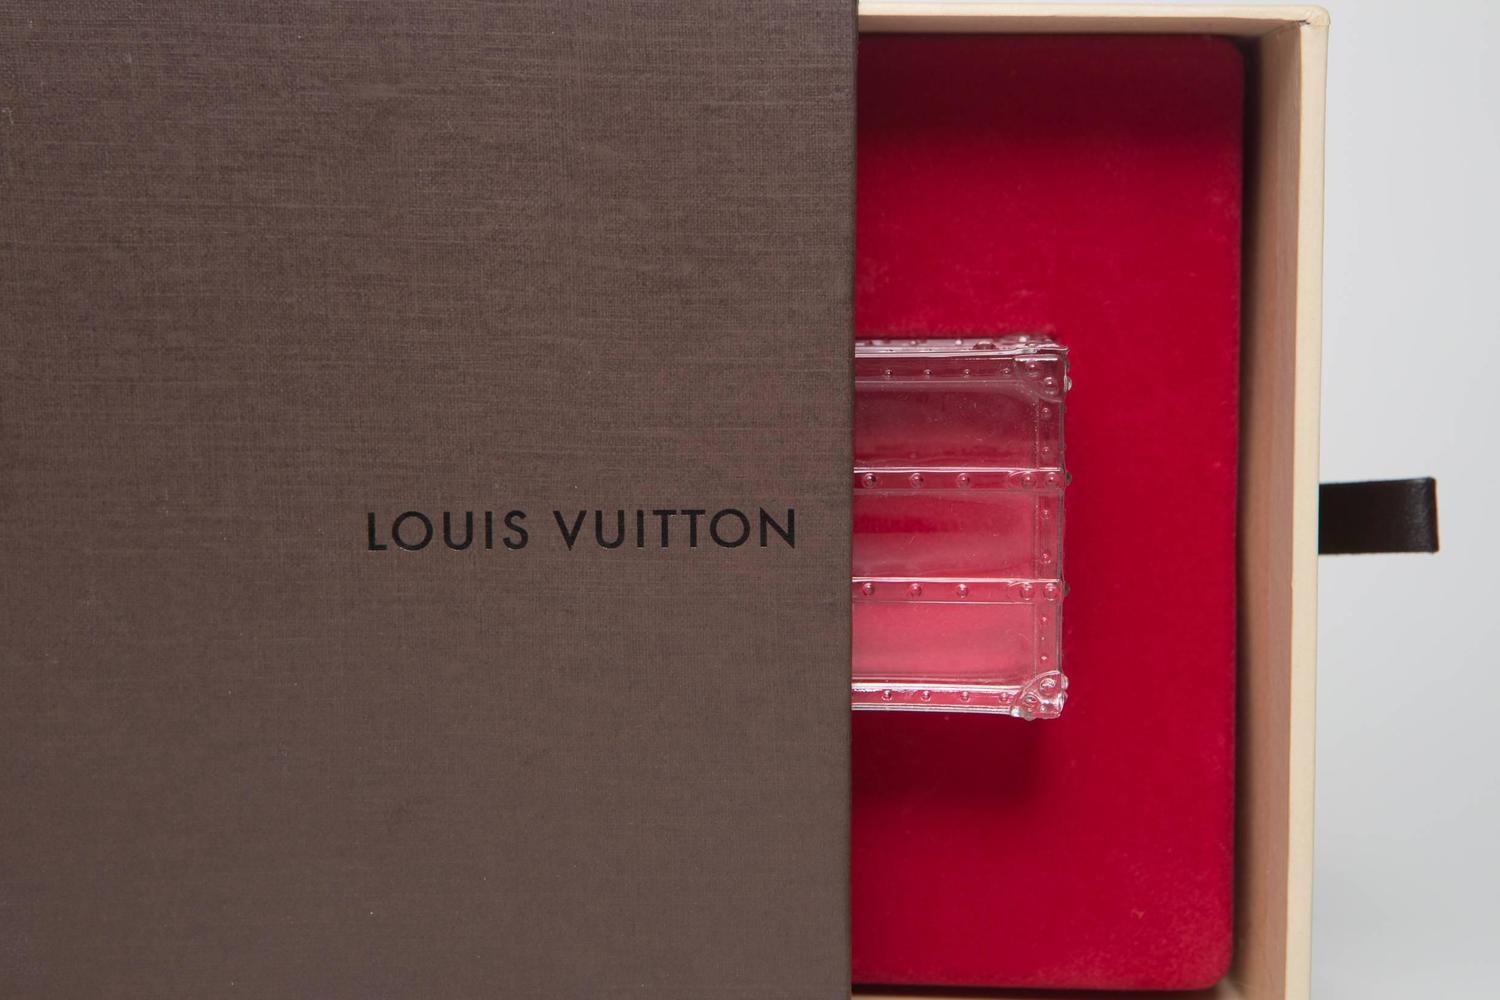 Louis Vuitton Paper Weight at 1stdibs